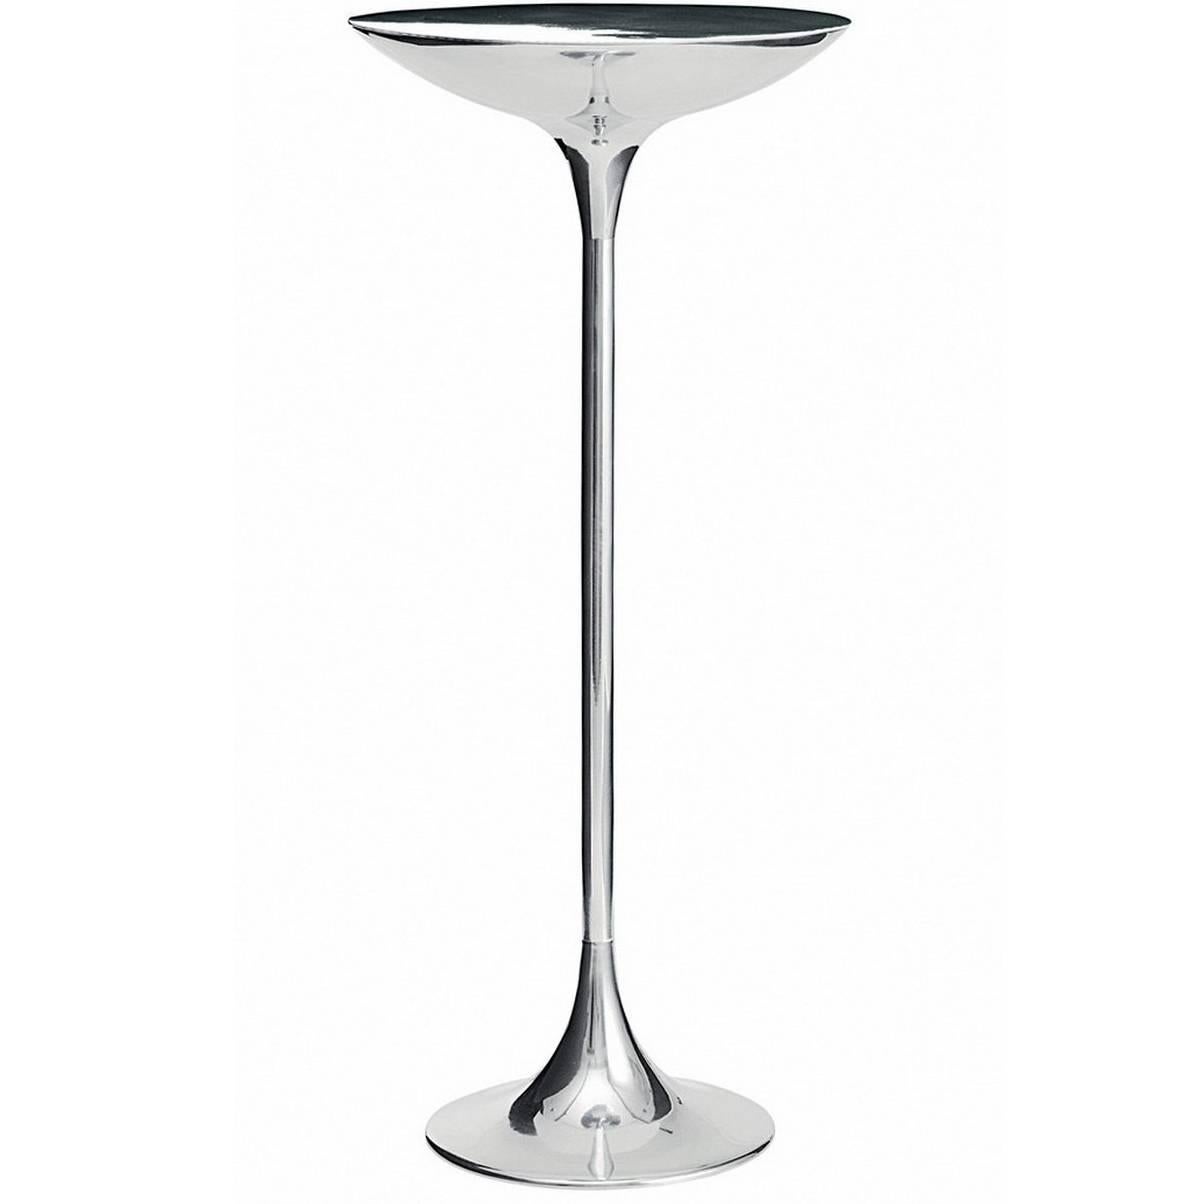 Petite table « Ping II » en aluminium poli de Giuseppe Chigiotti pour Driade